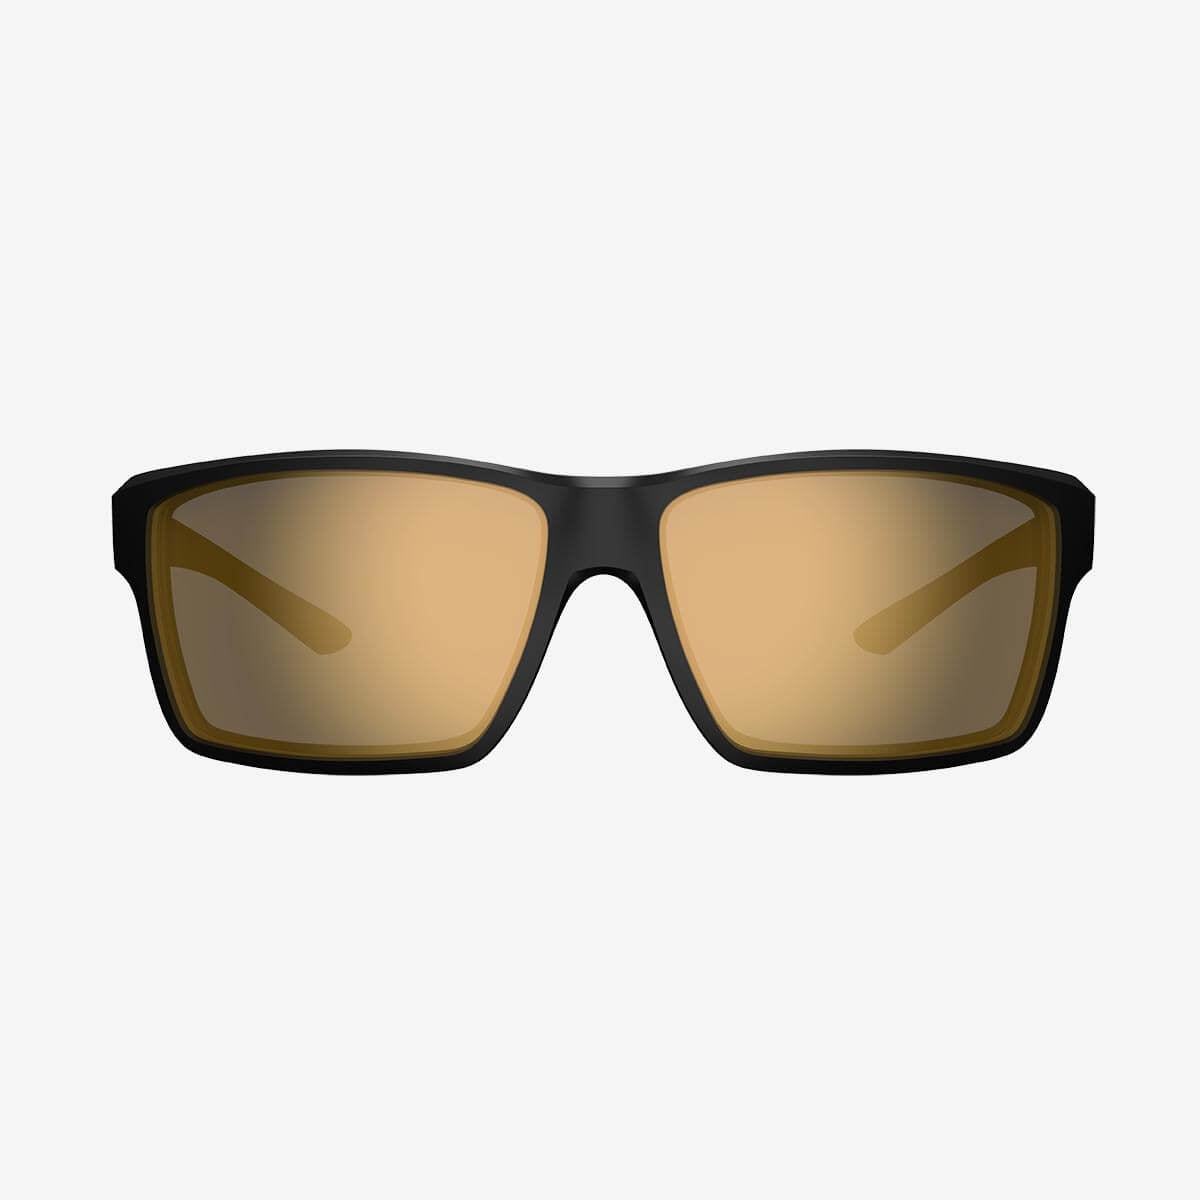 Magpul - Explorer Eyewear, Polarized - Black Frame, Bronze Lens with Gold Mirror